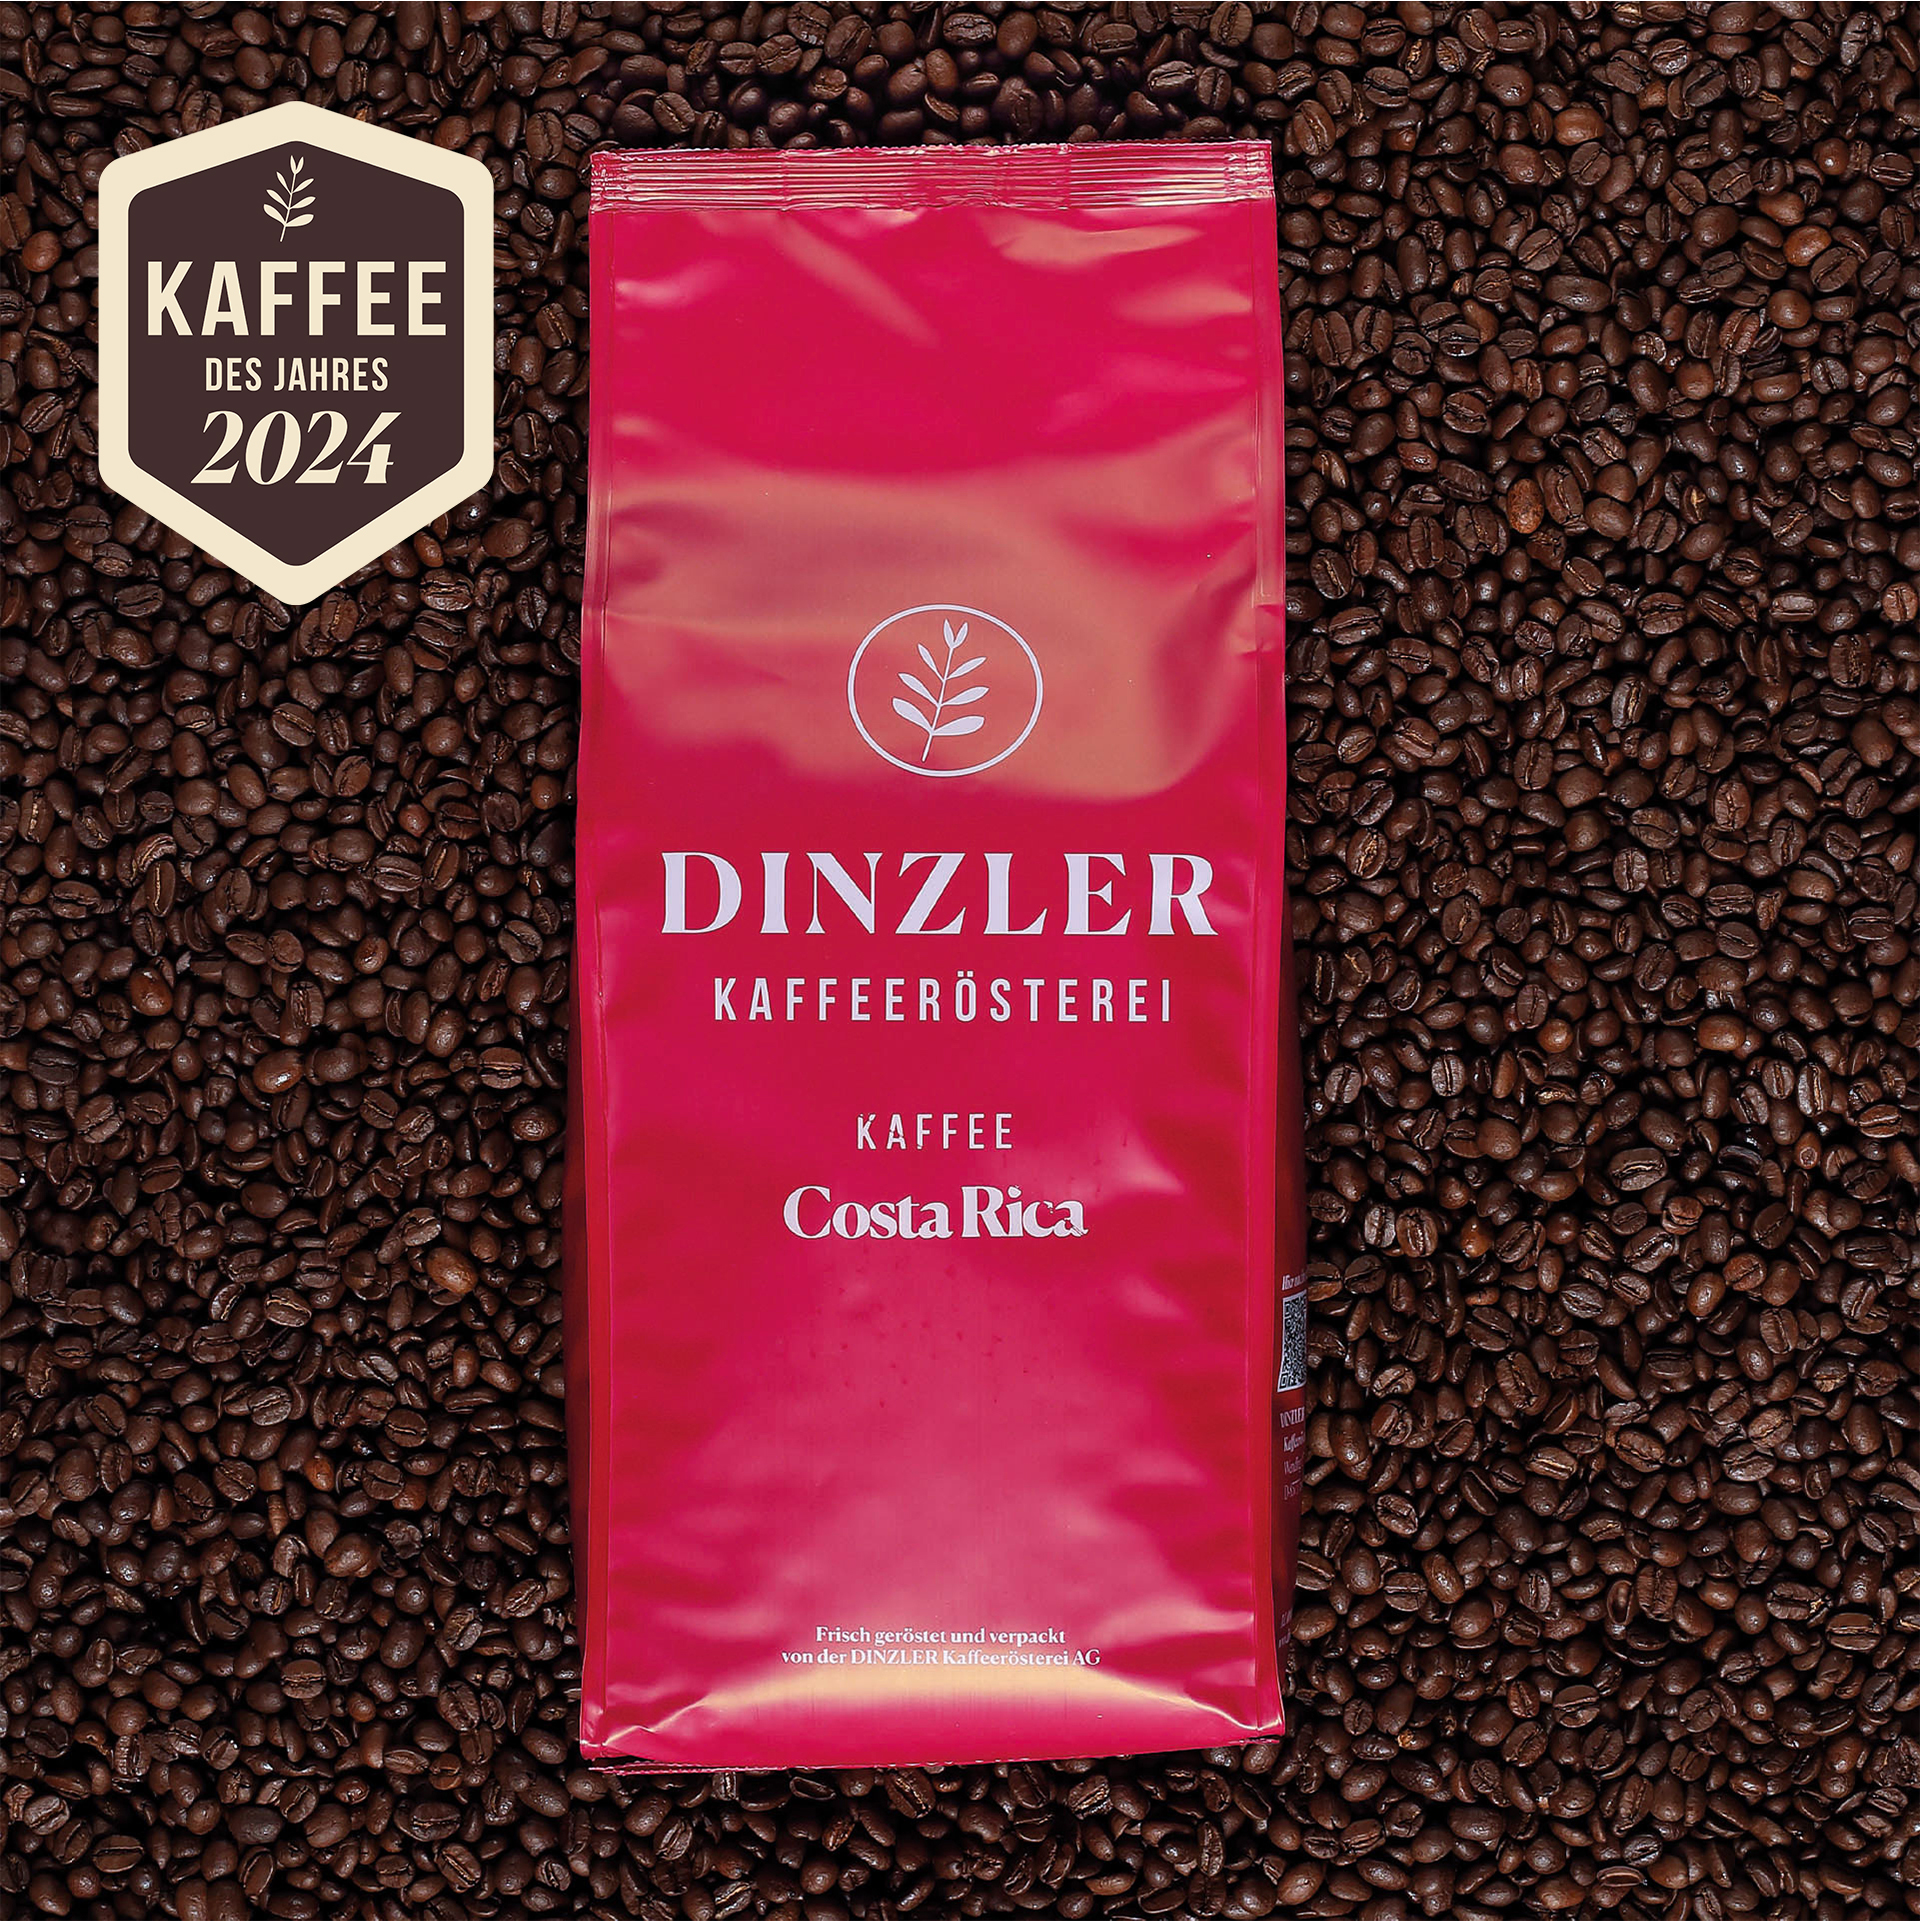 DINZLER Kaffee Costa Rica| DINZLER Kaffeerösterei